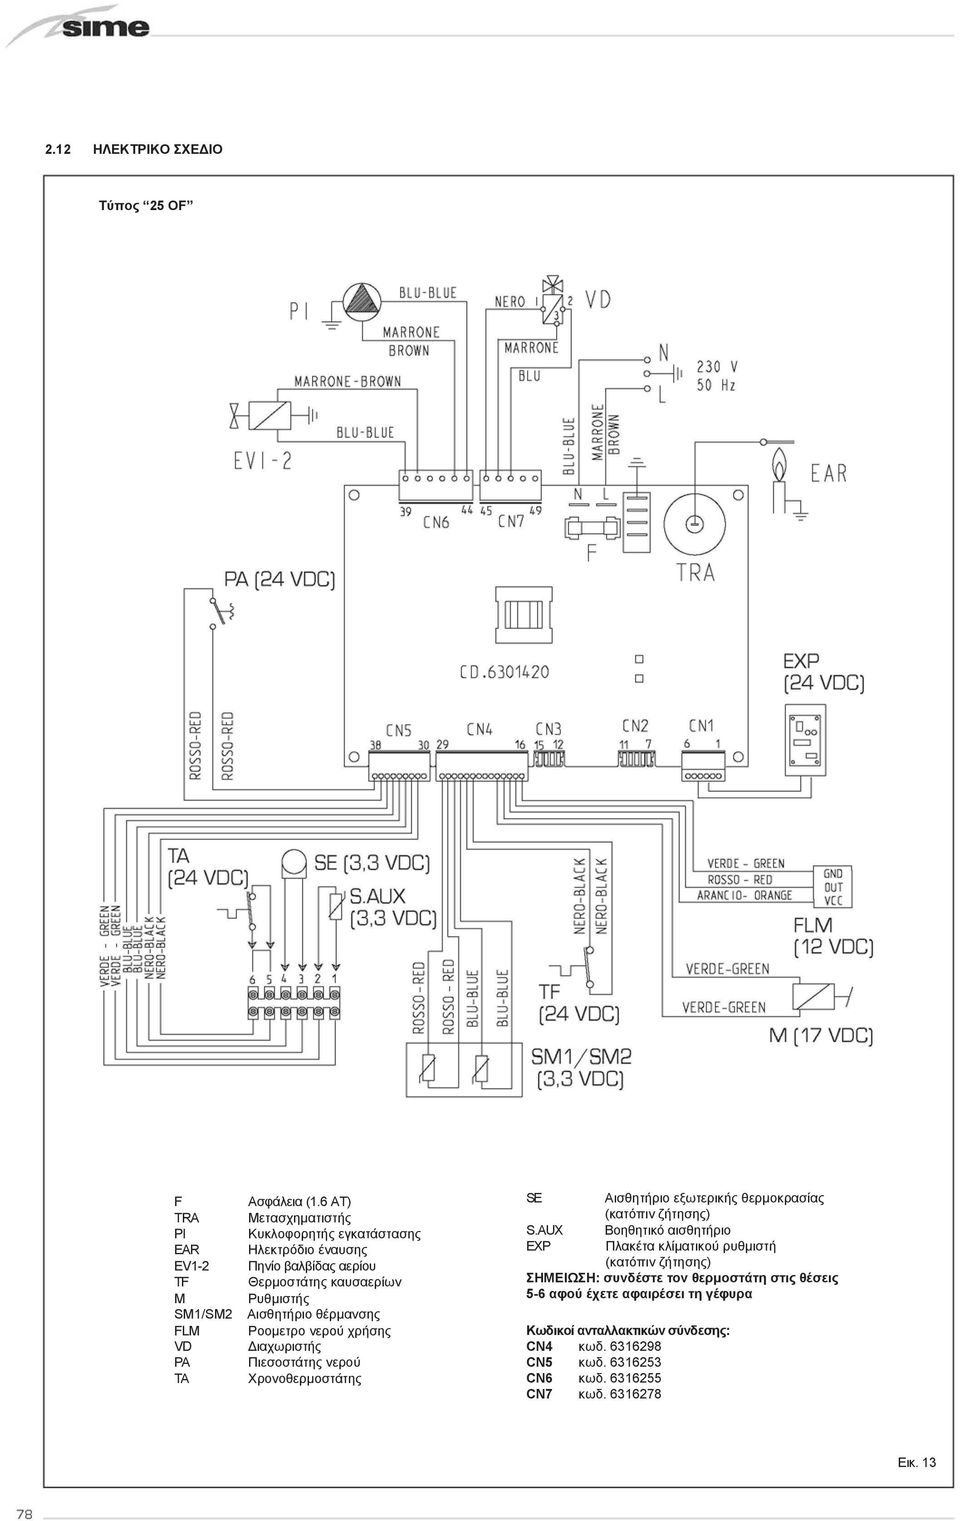 AUX Βοηθητικό αισθητήριο EAR Ηλεκτρόδιο έναυσης EXP Πλακέτα κλίματικού ρυθμιστή EV1-2 Πηνίο βαλβίδας αερίου (κατόπιν ζήτησης) TF Θερμοστάτης καυσαερίων